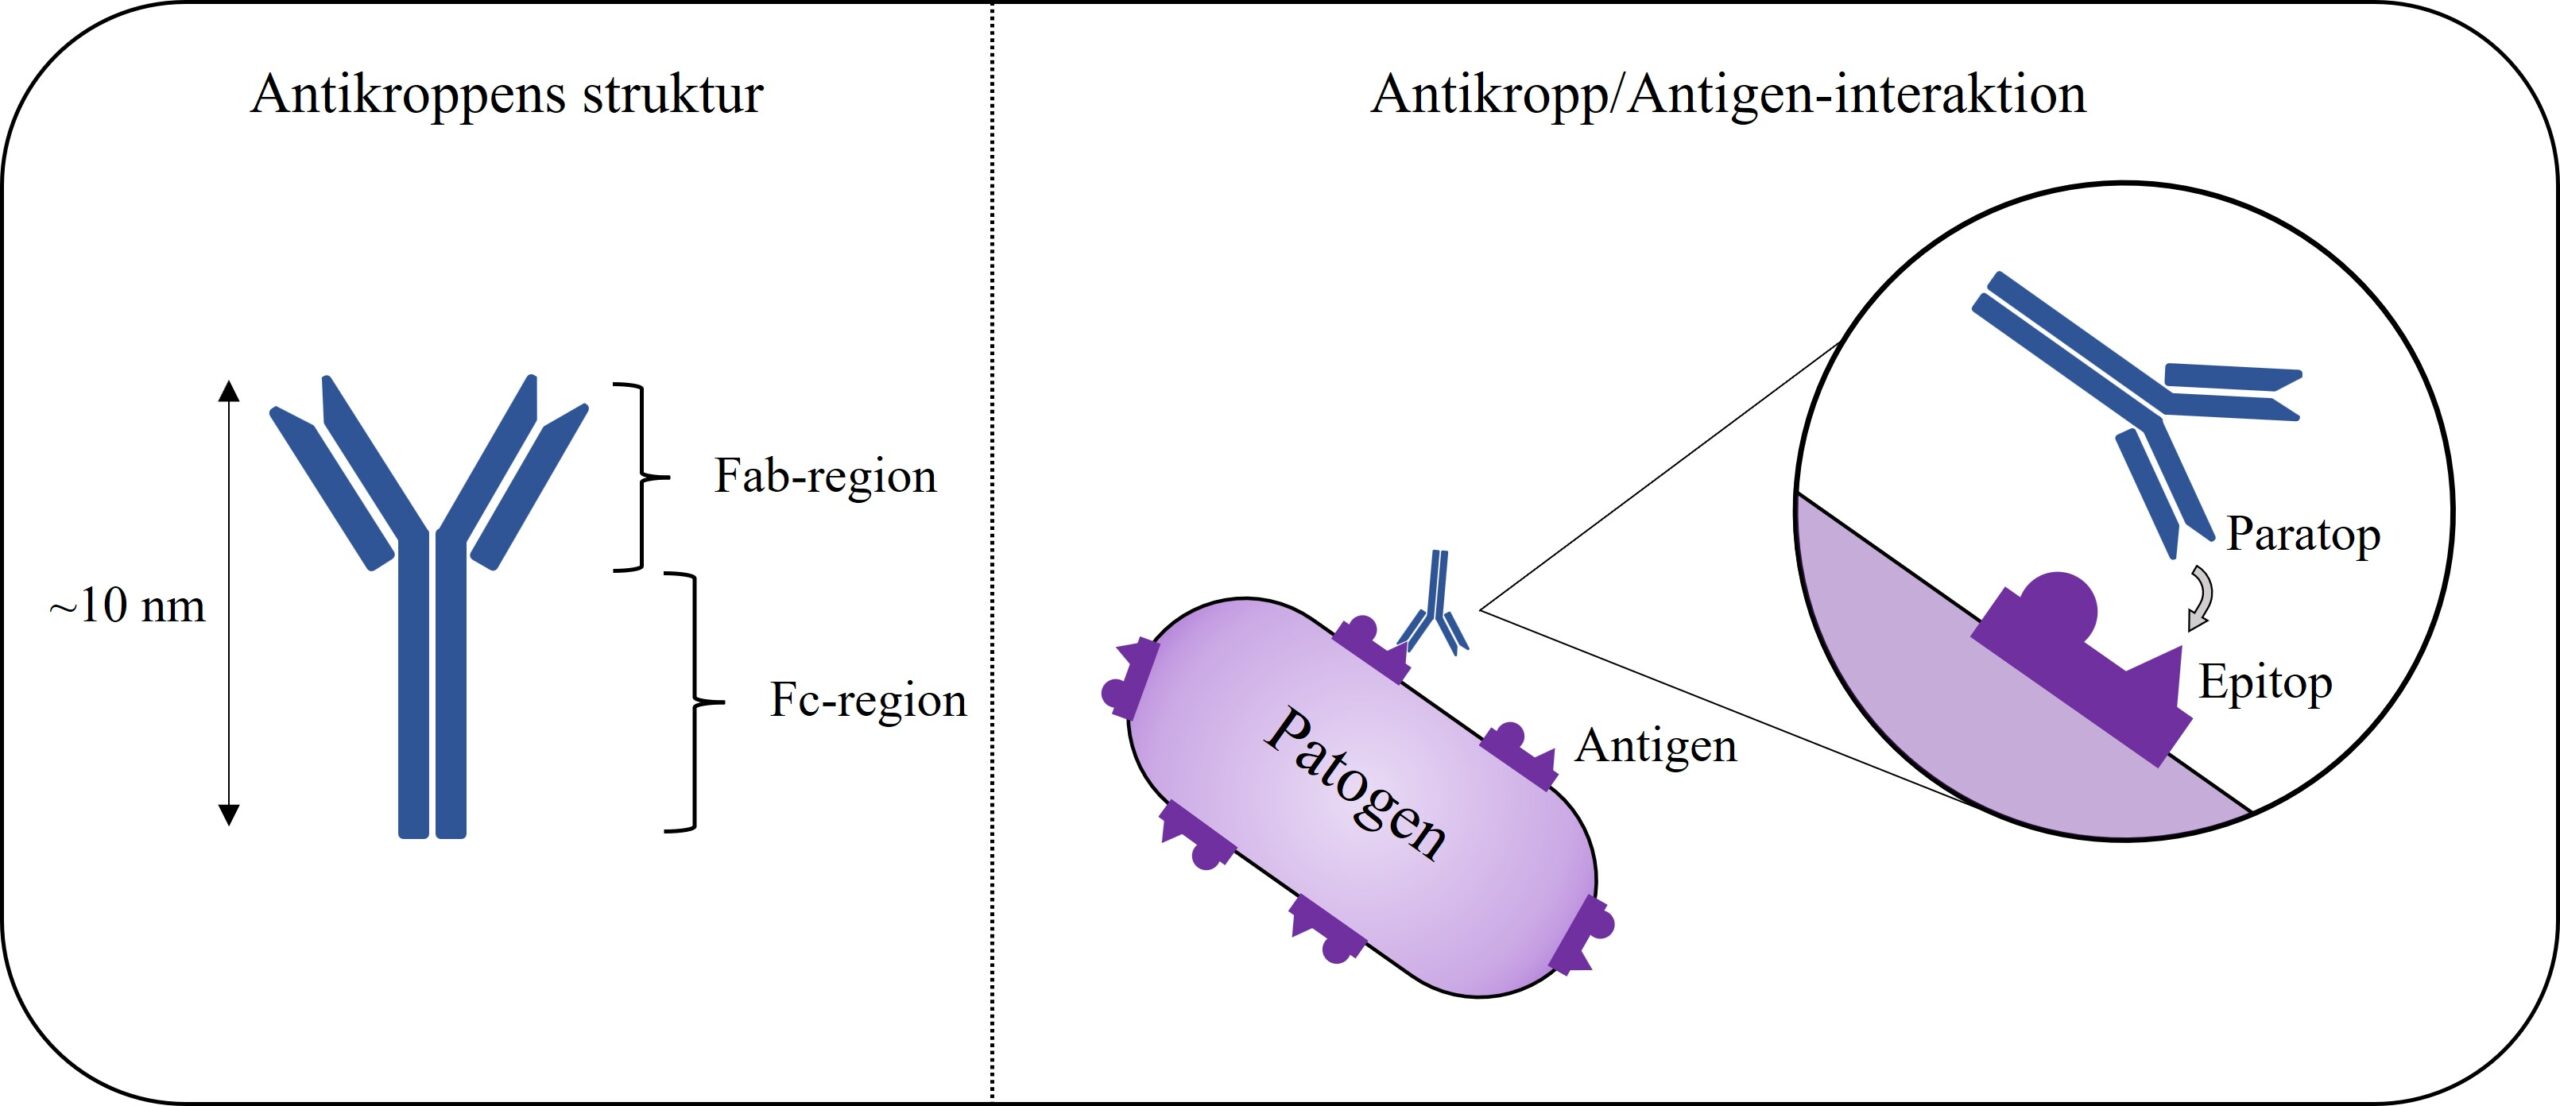 Antikroppars struktur